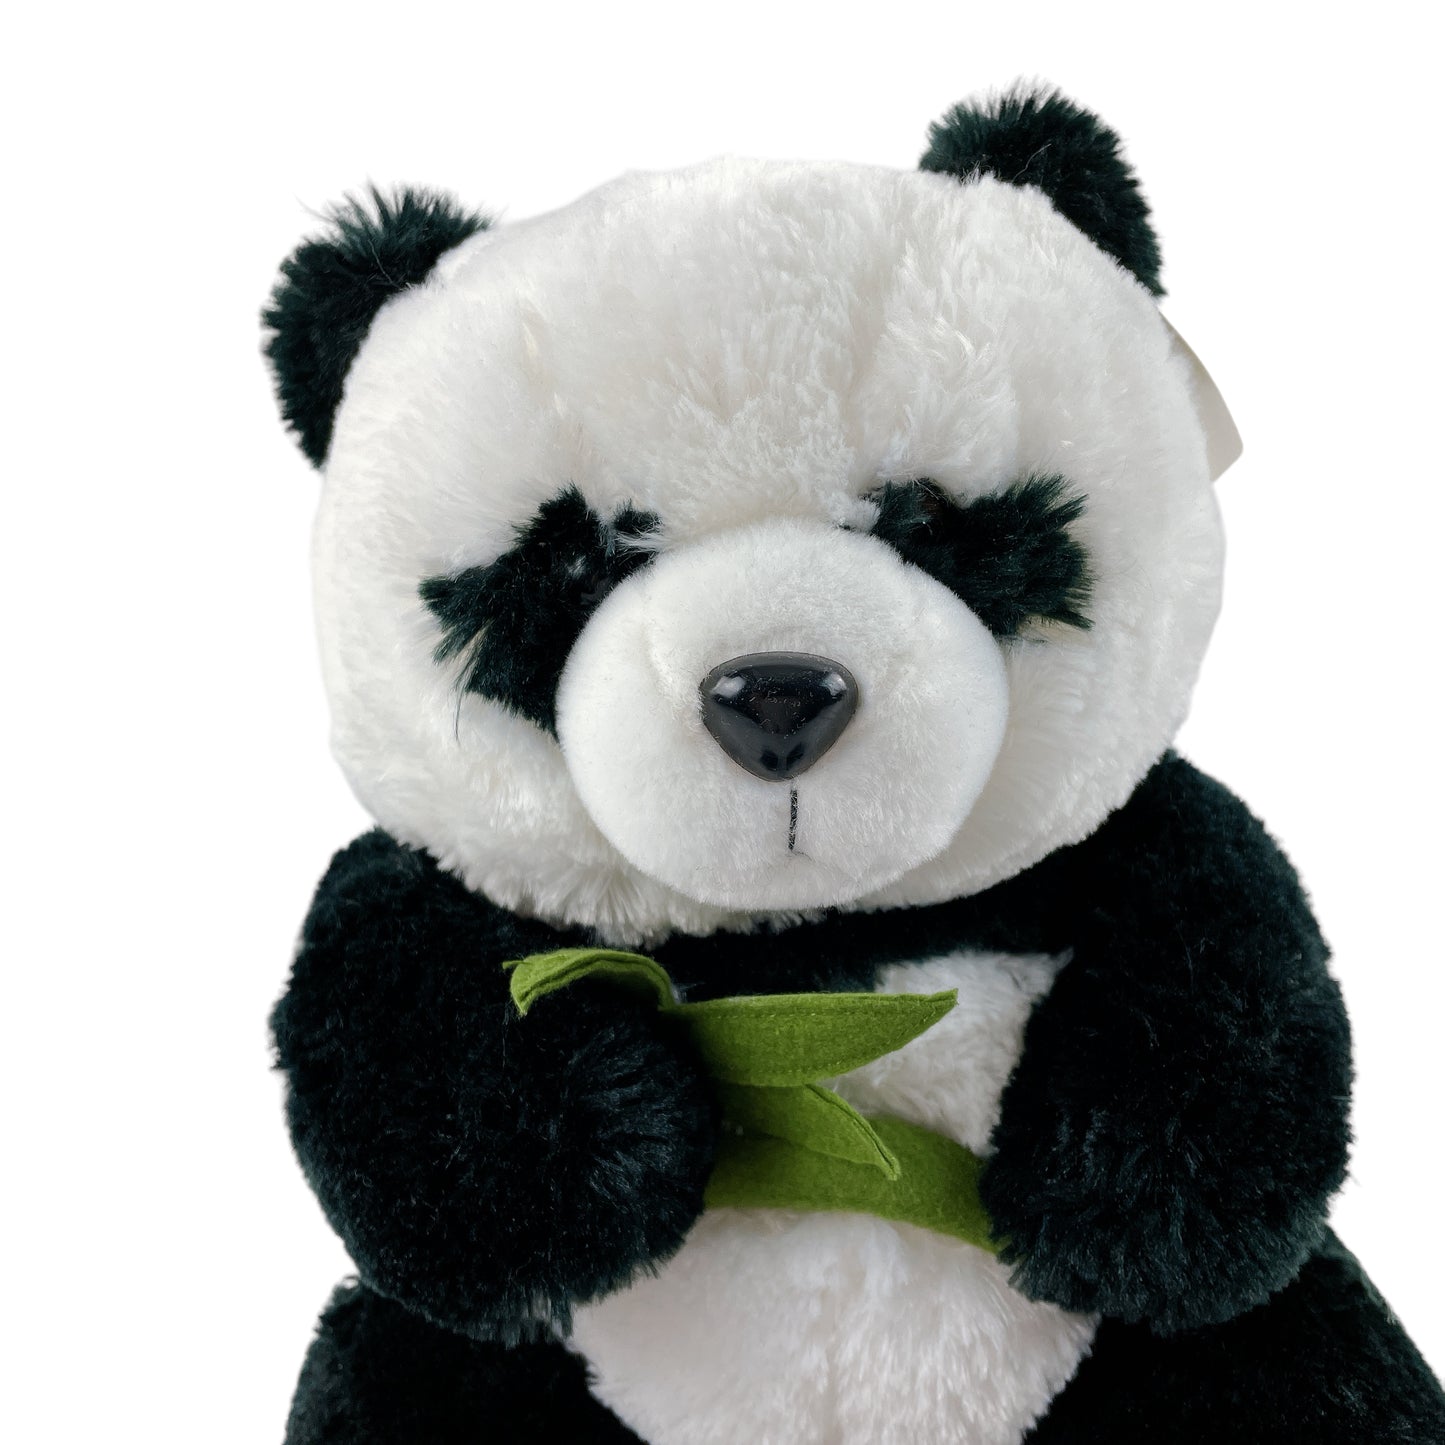 Kuscheltier Pandabär, Stofftier